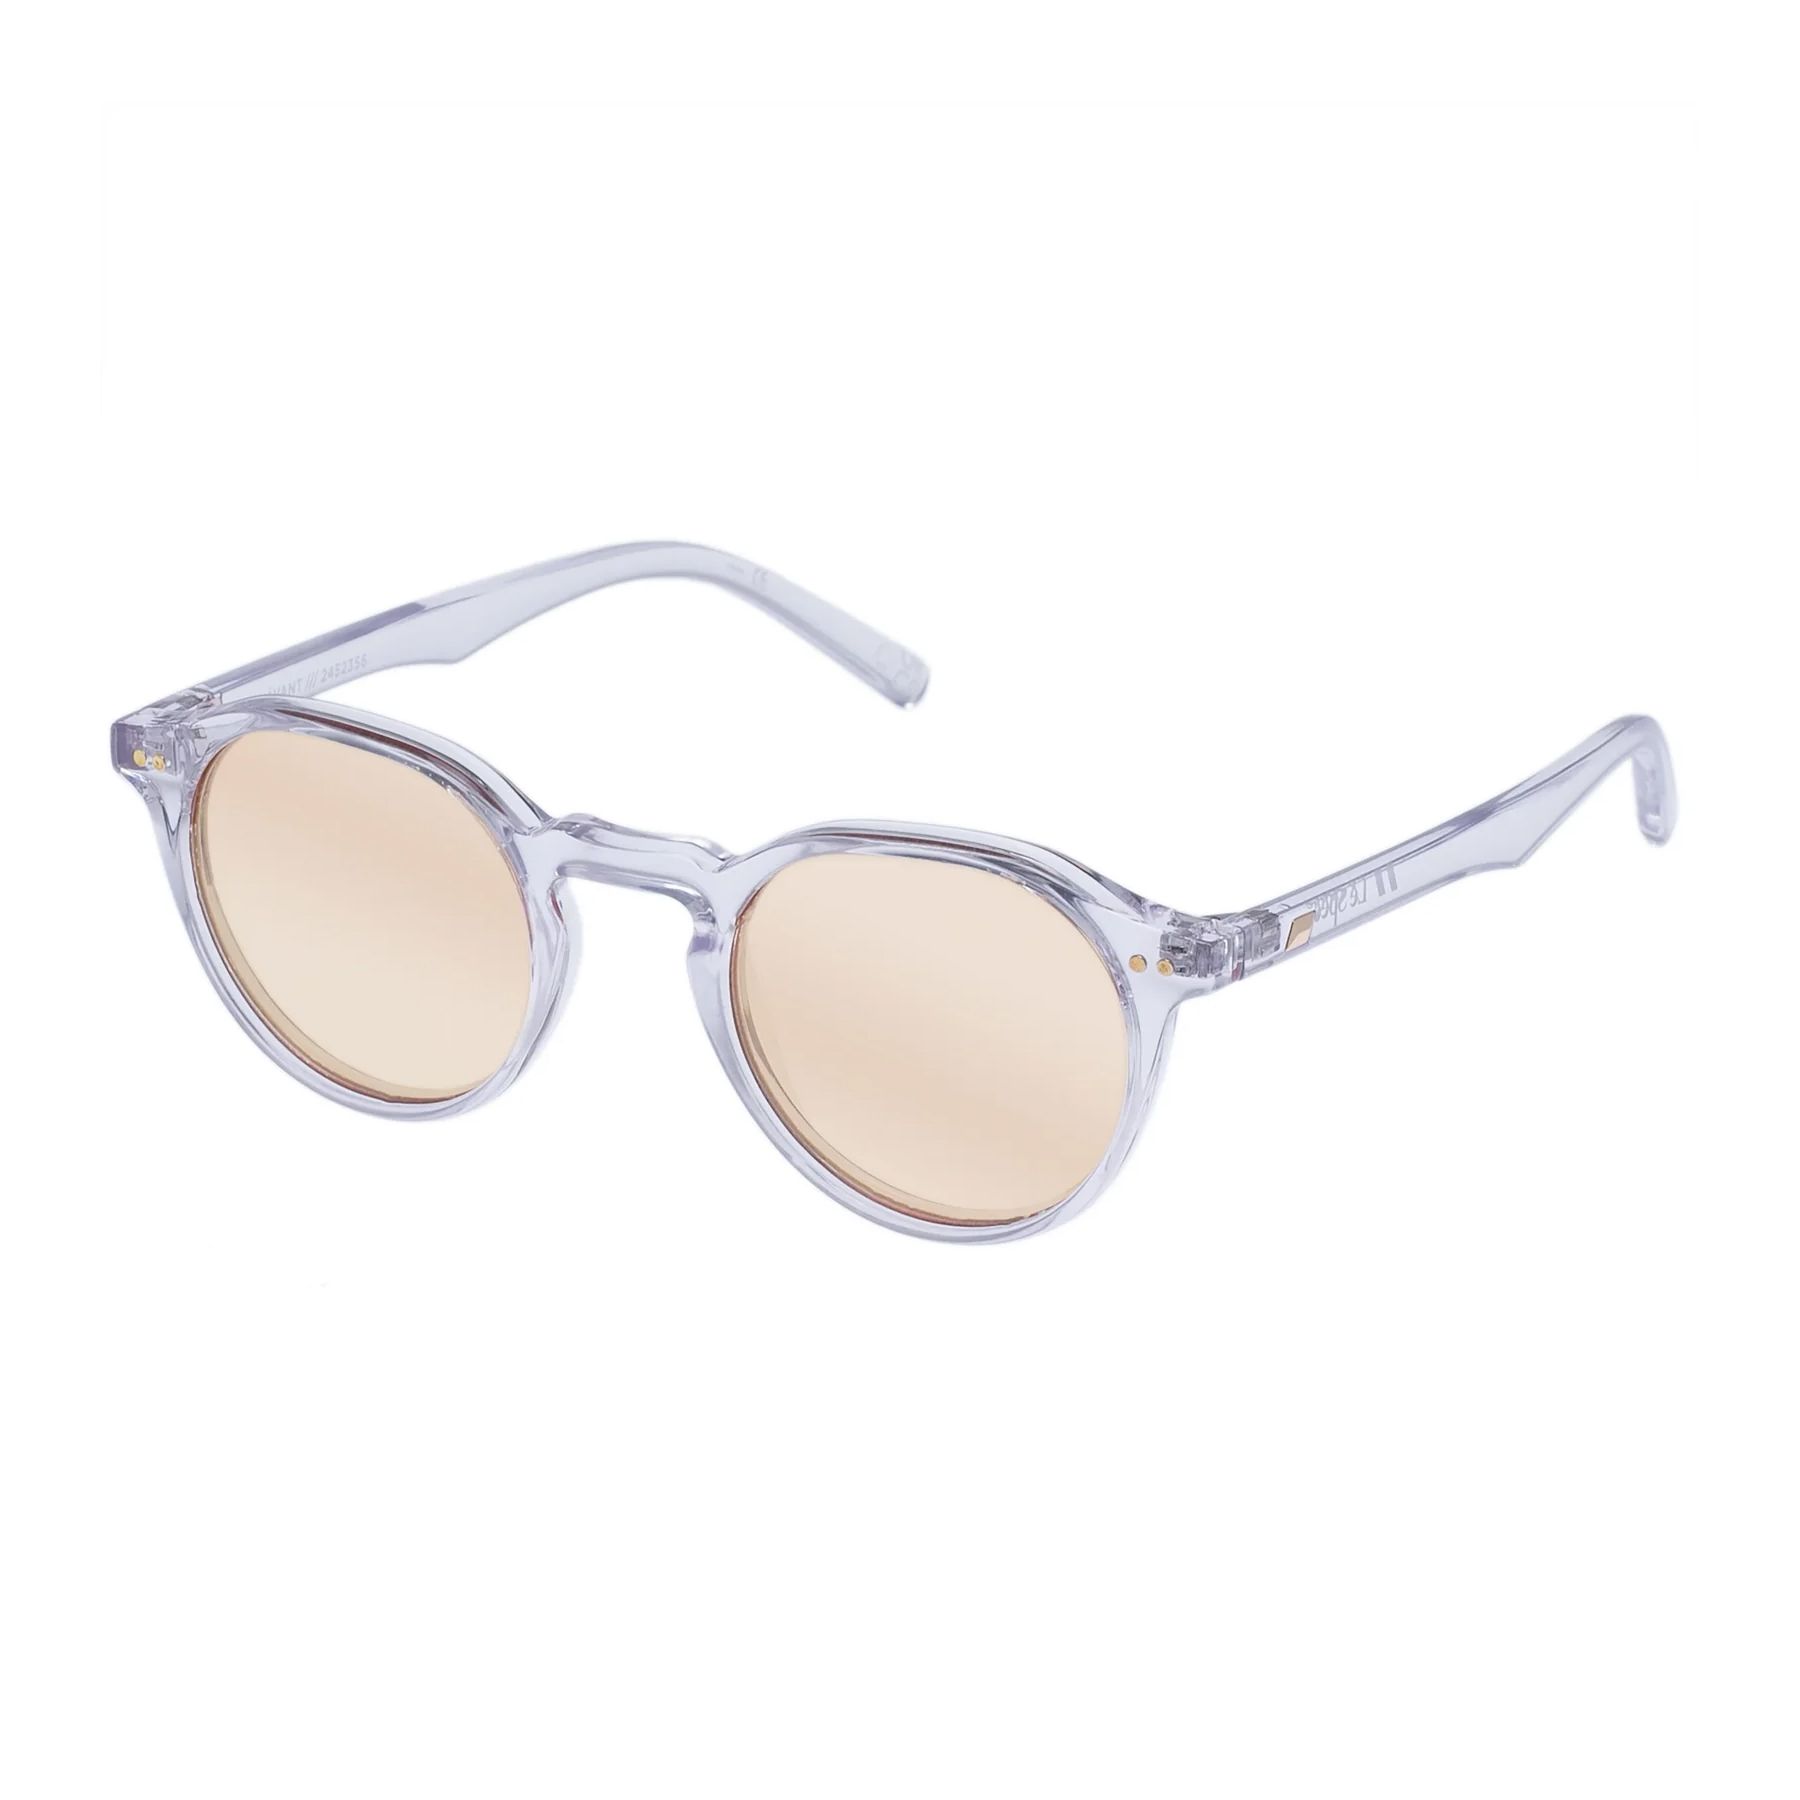 GALAVANT Round Sunglasses CLEAR - size 48